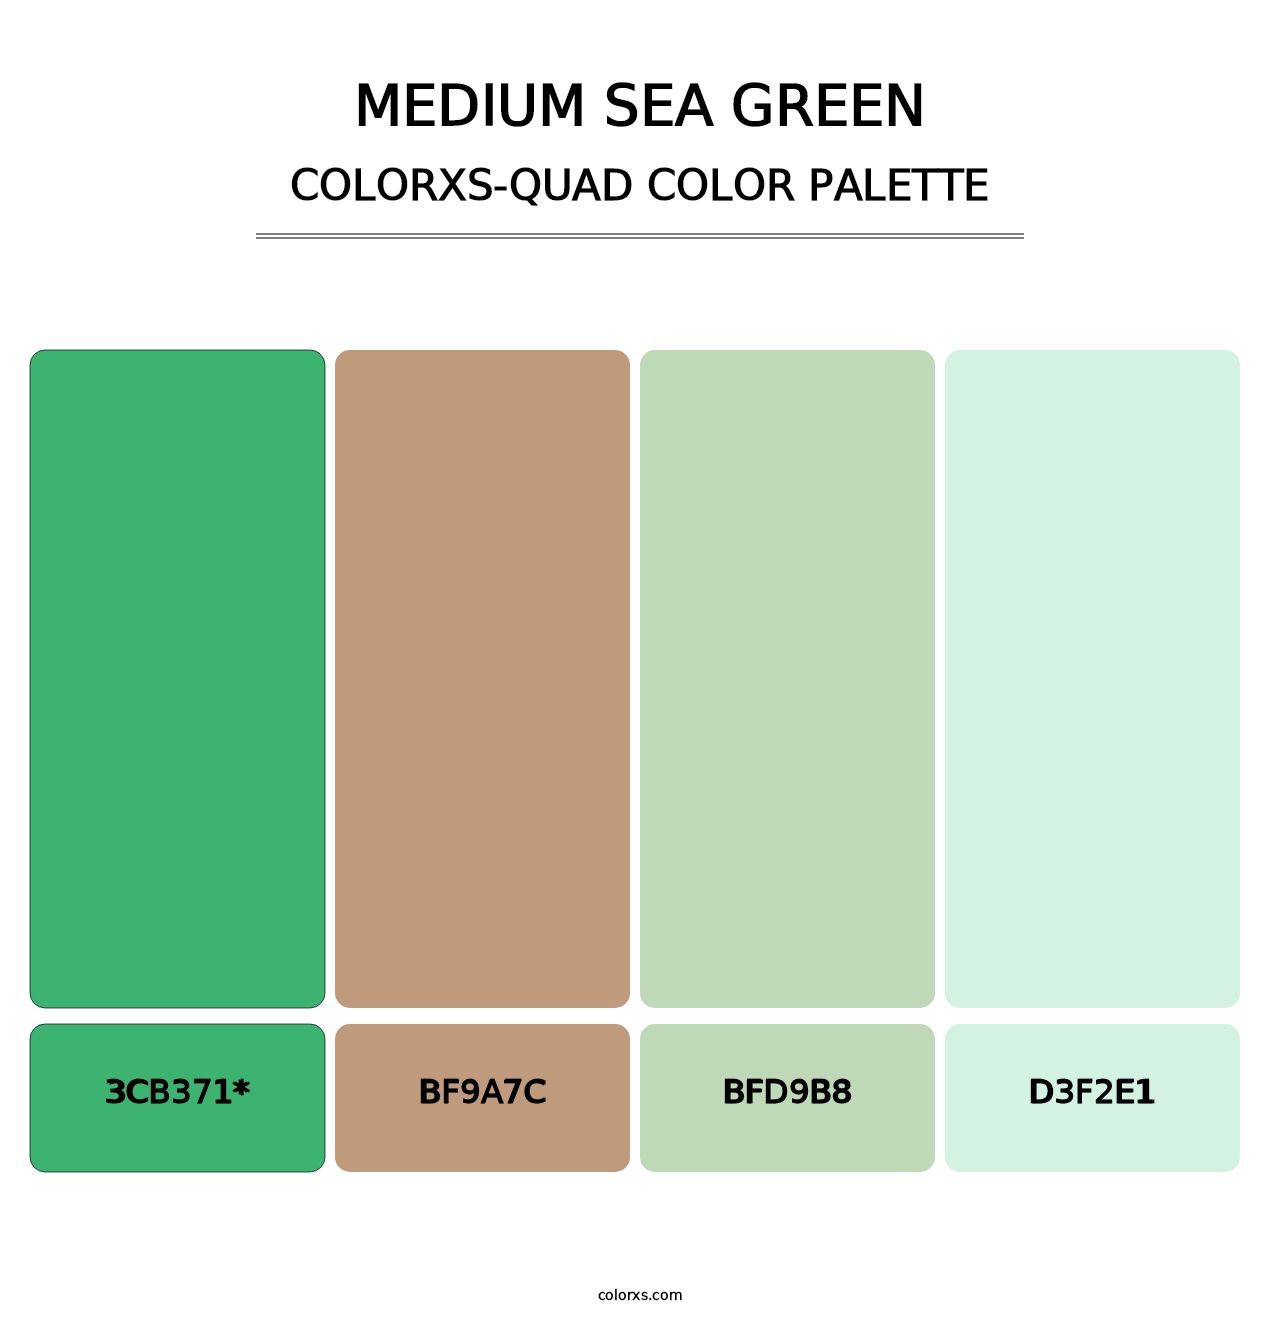 Medium Sea Green - Colorxs Quad Palette